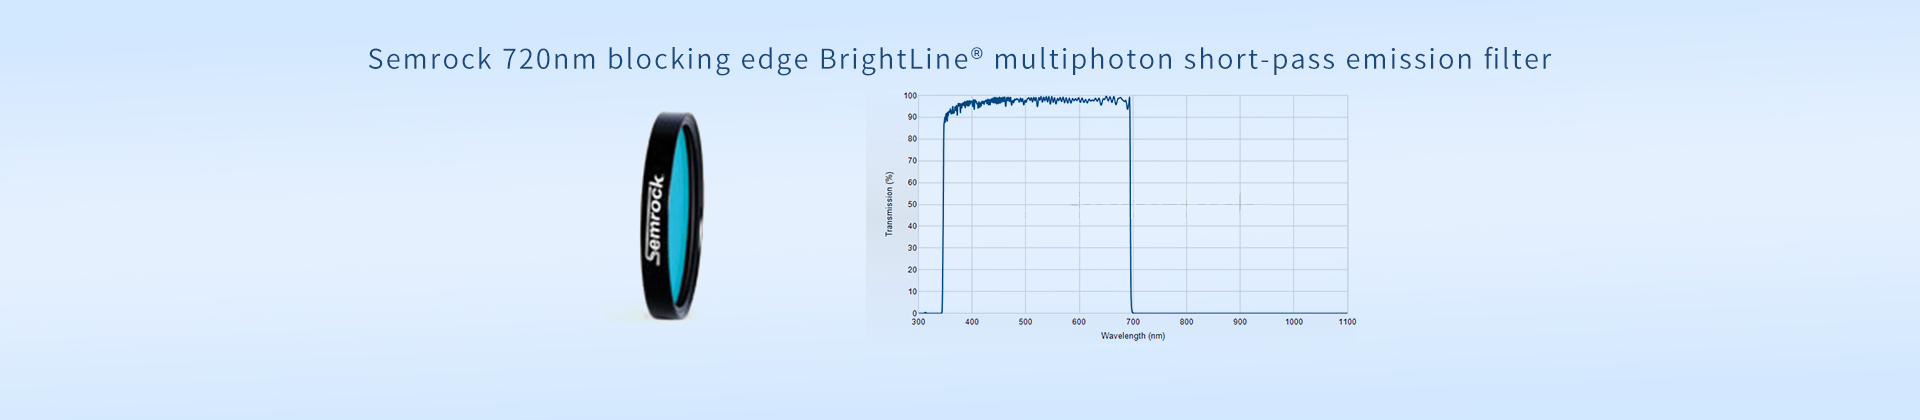 Semrock 720nm blocking edge BrightLine® multiphoton short-pass emission filter